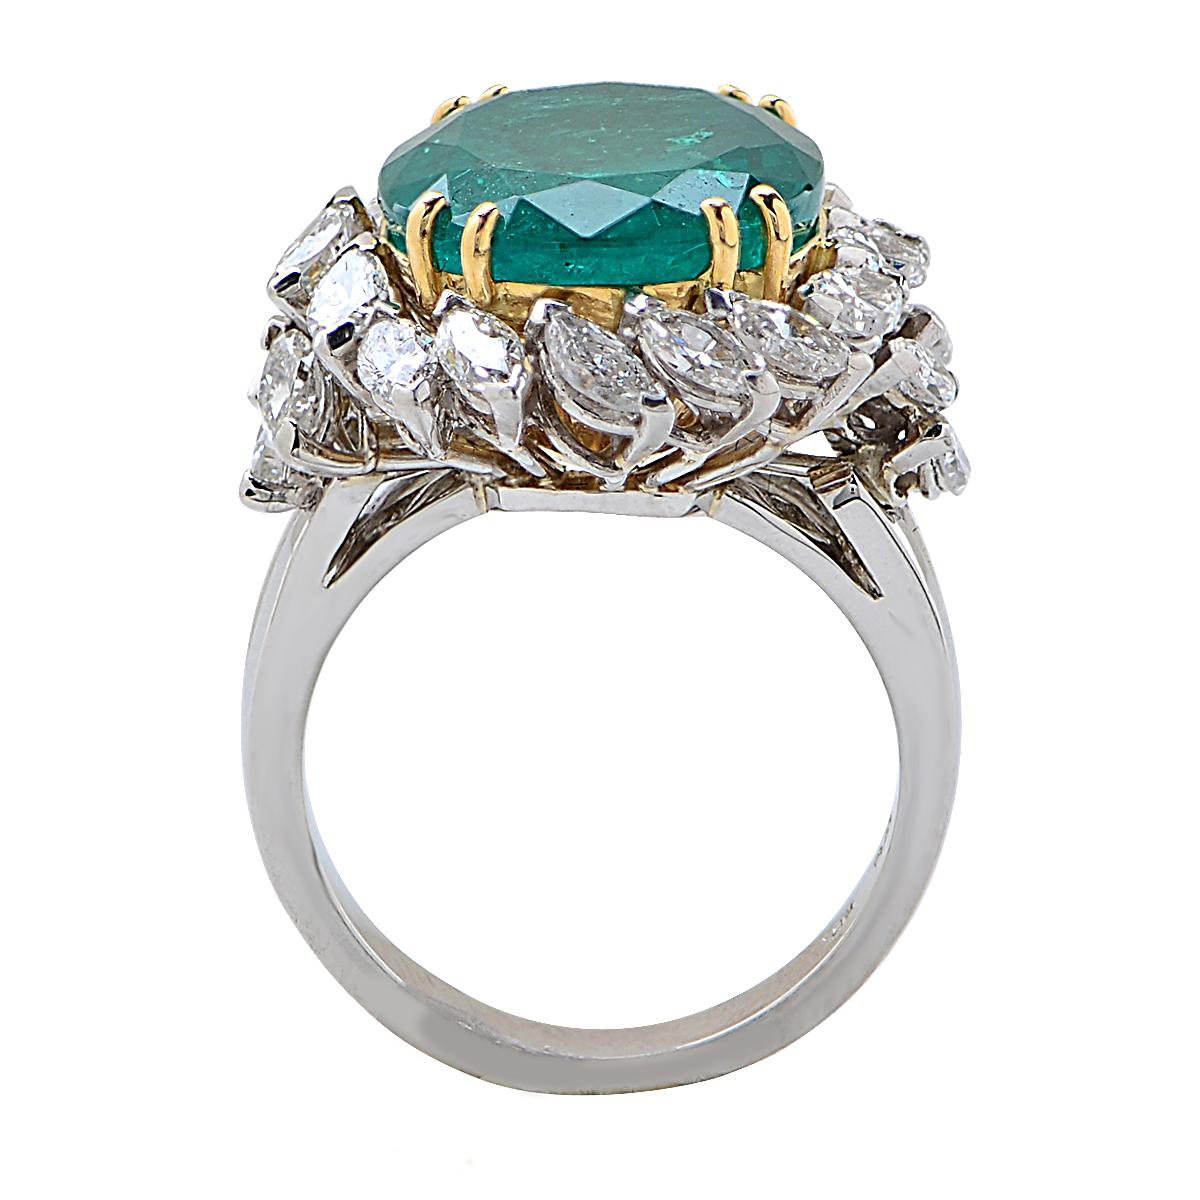 Oval Cut Vivid Diamonds AGL Certified 1.02 Carat Colombian Emerald and Diamond Ring